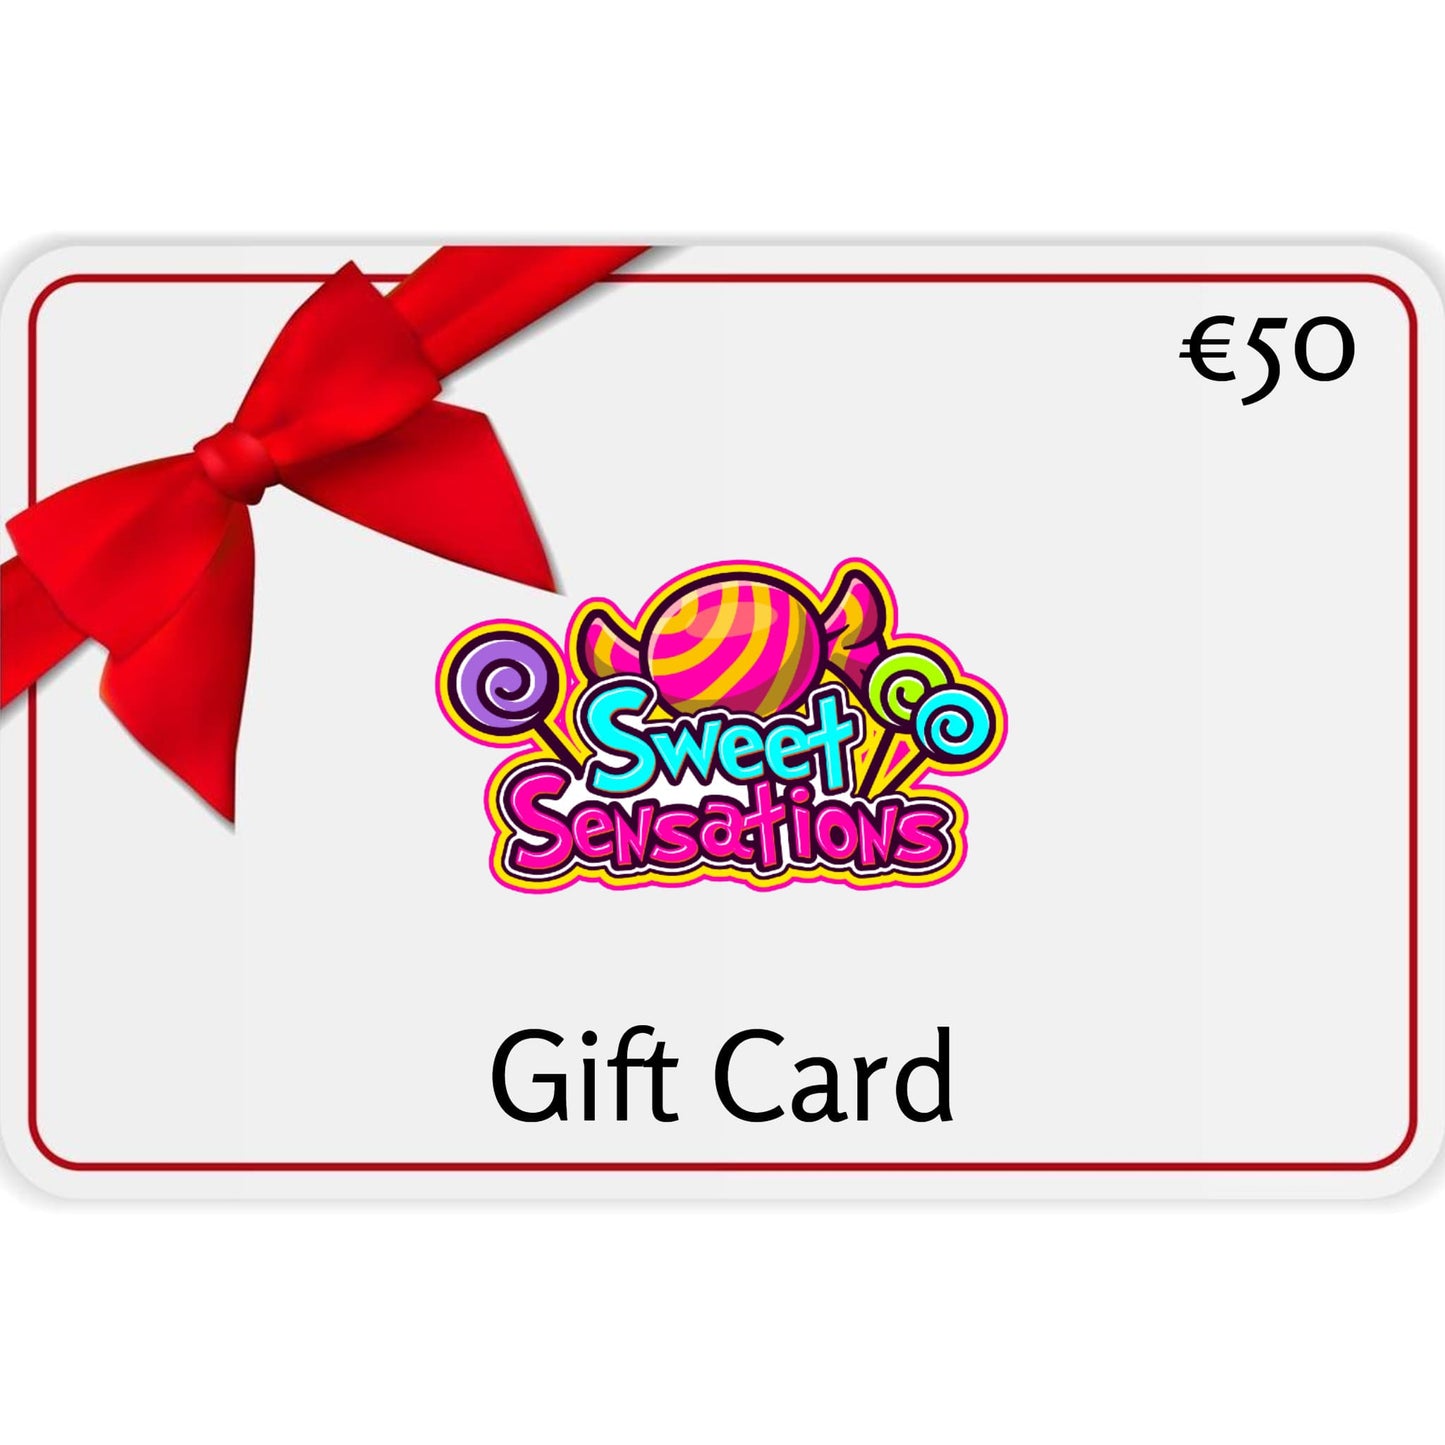 Sweet Sensations €50 Gift Card